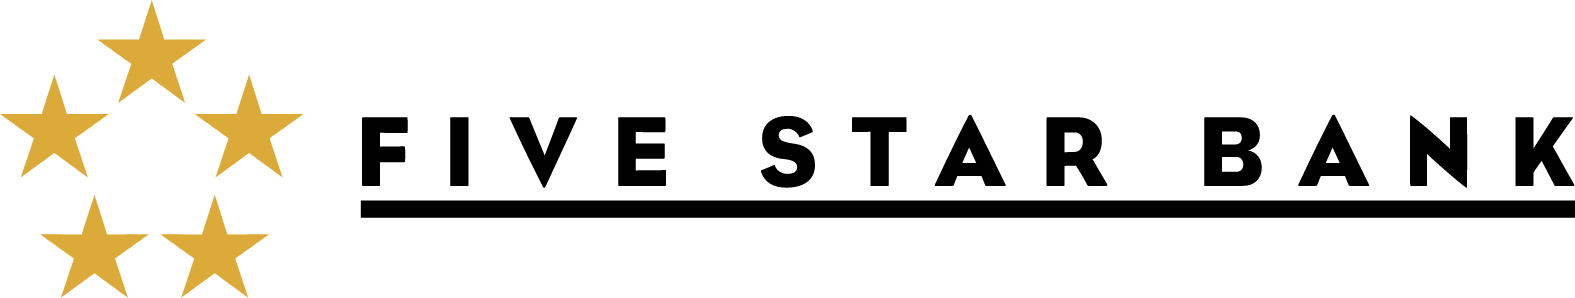 Five Star Bancorp logo large (transparent PNG)